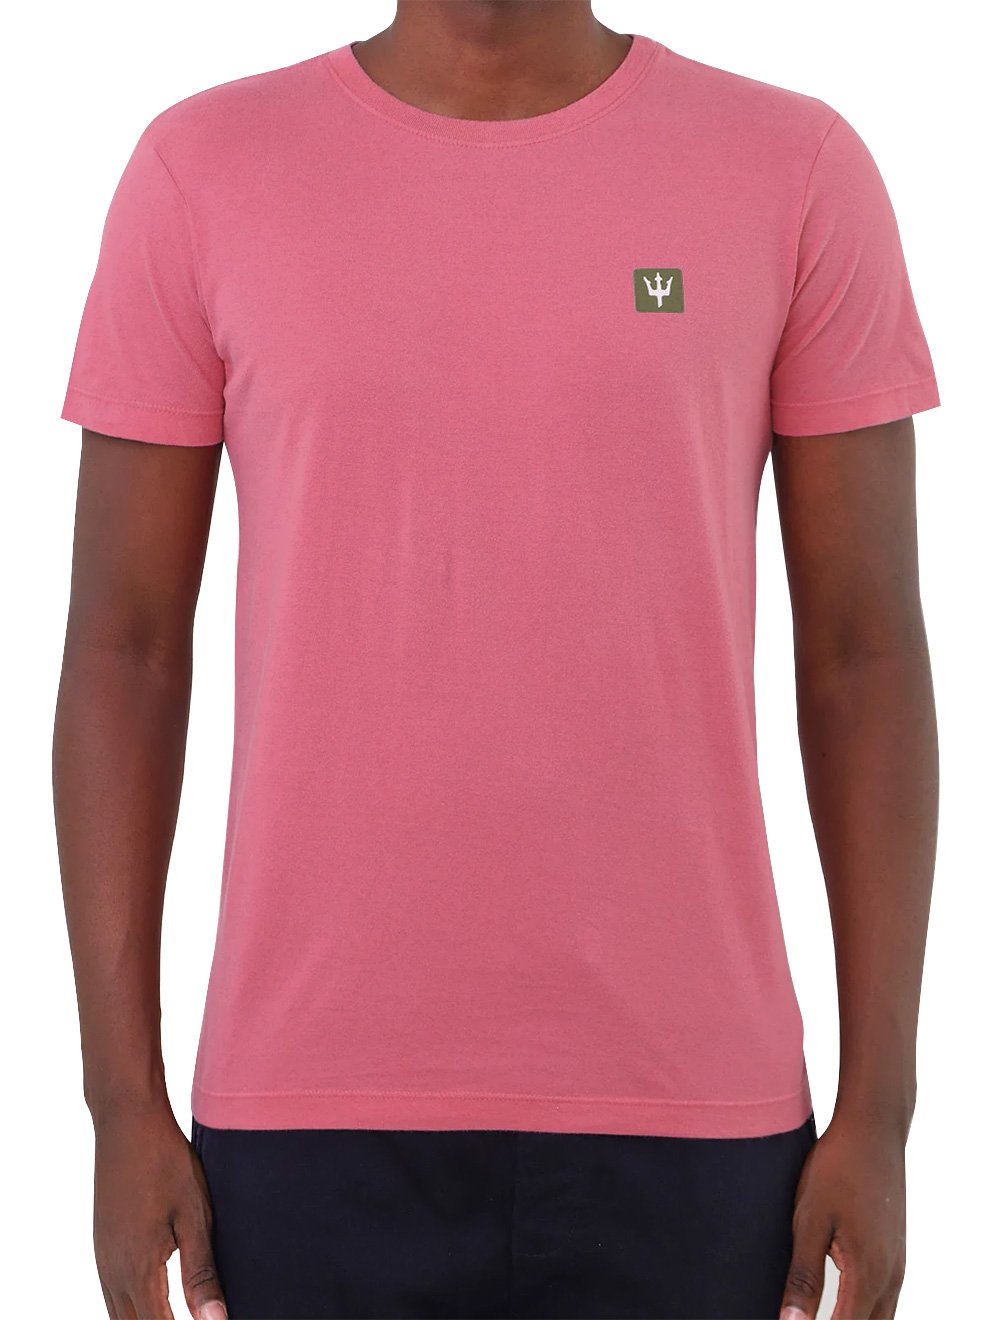 Camiseta Osklen Masculina Slim Stone Tridente Classico Rosa